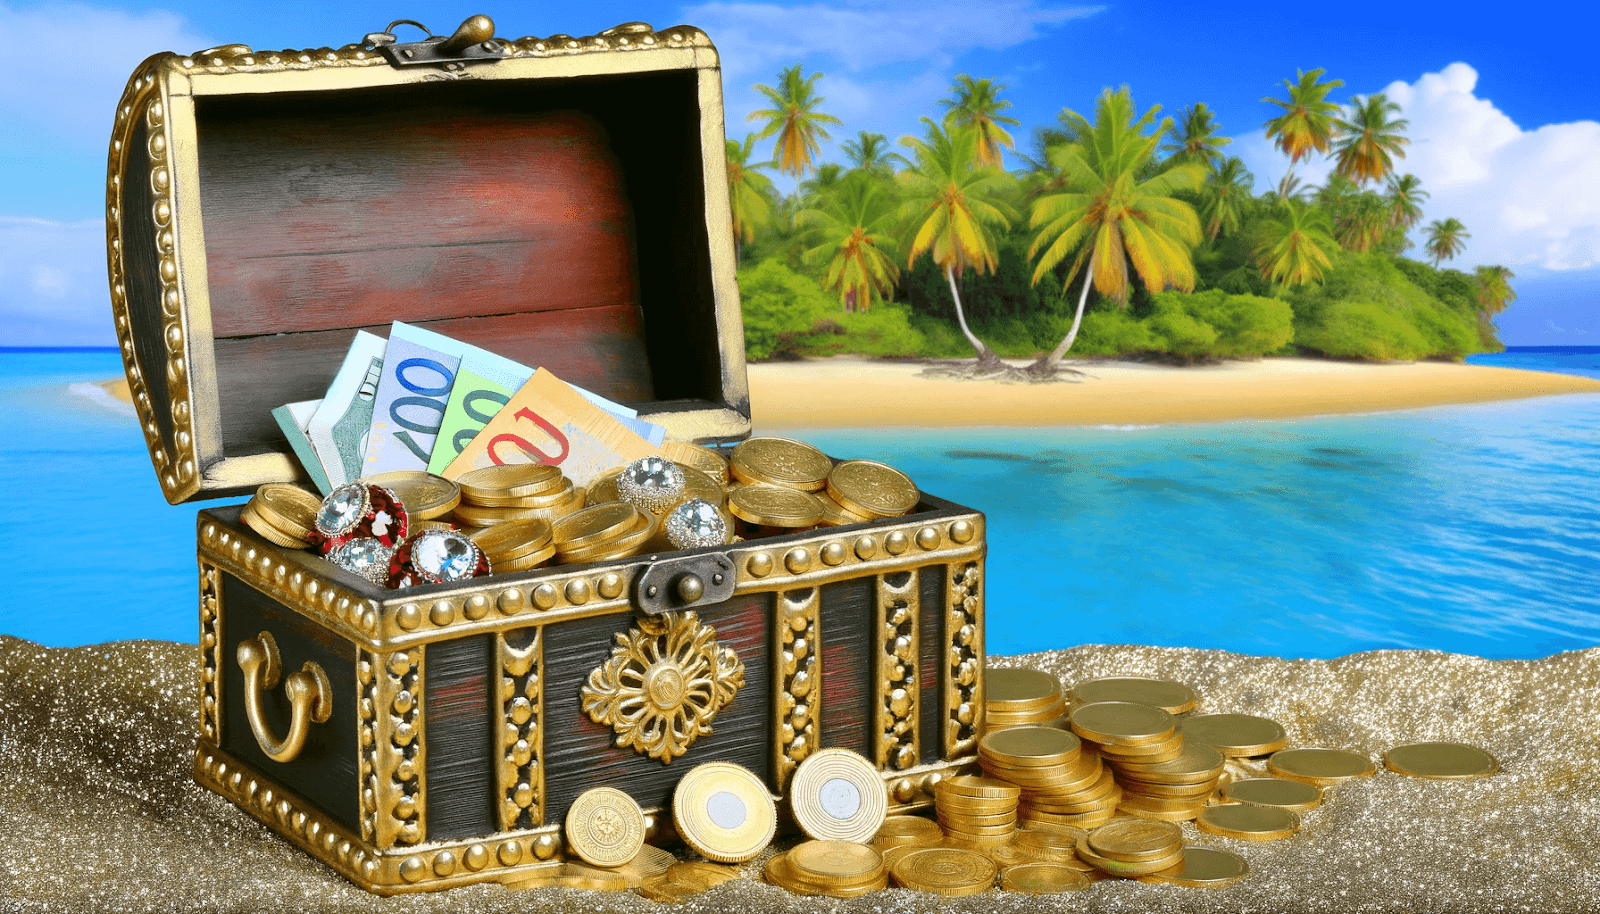 Treasure chest in an island.